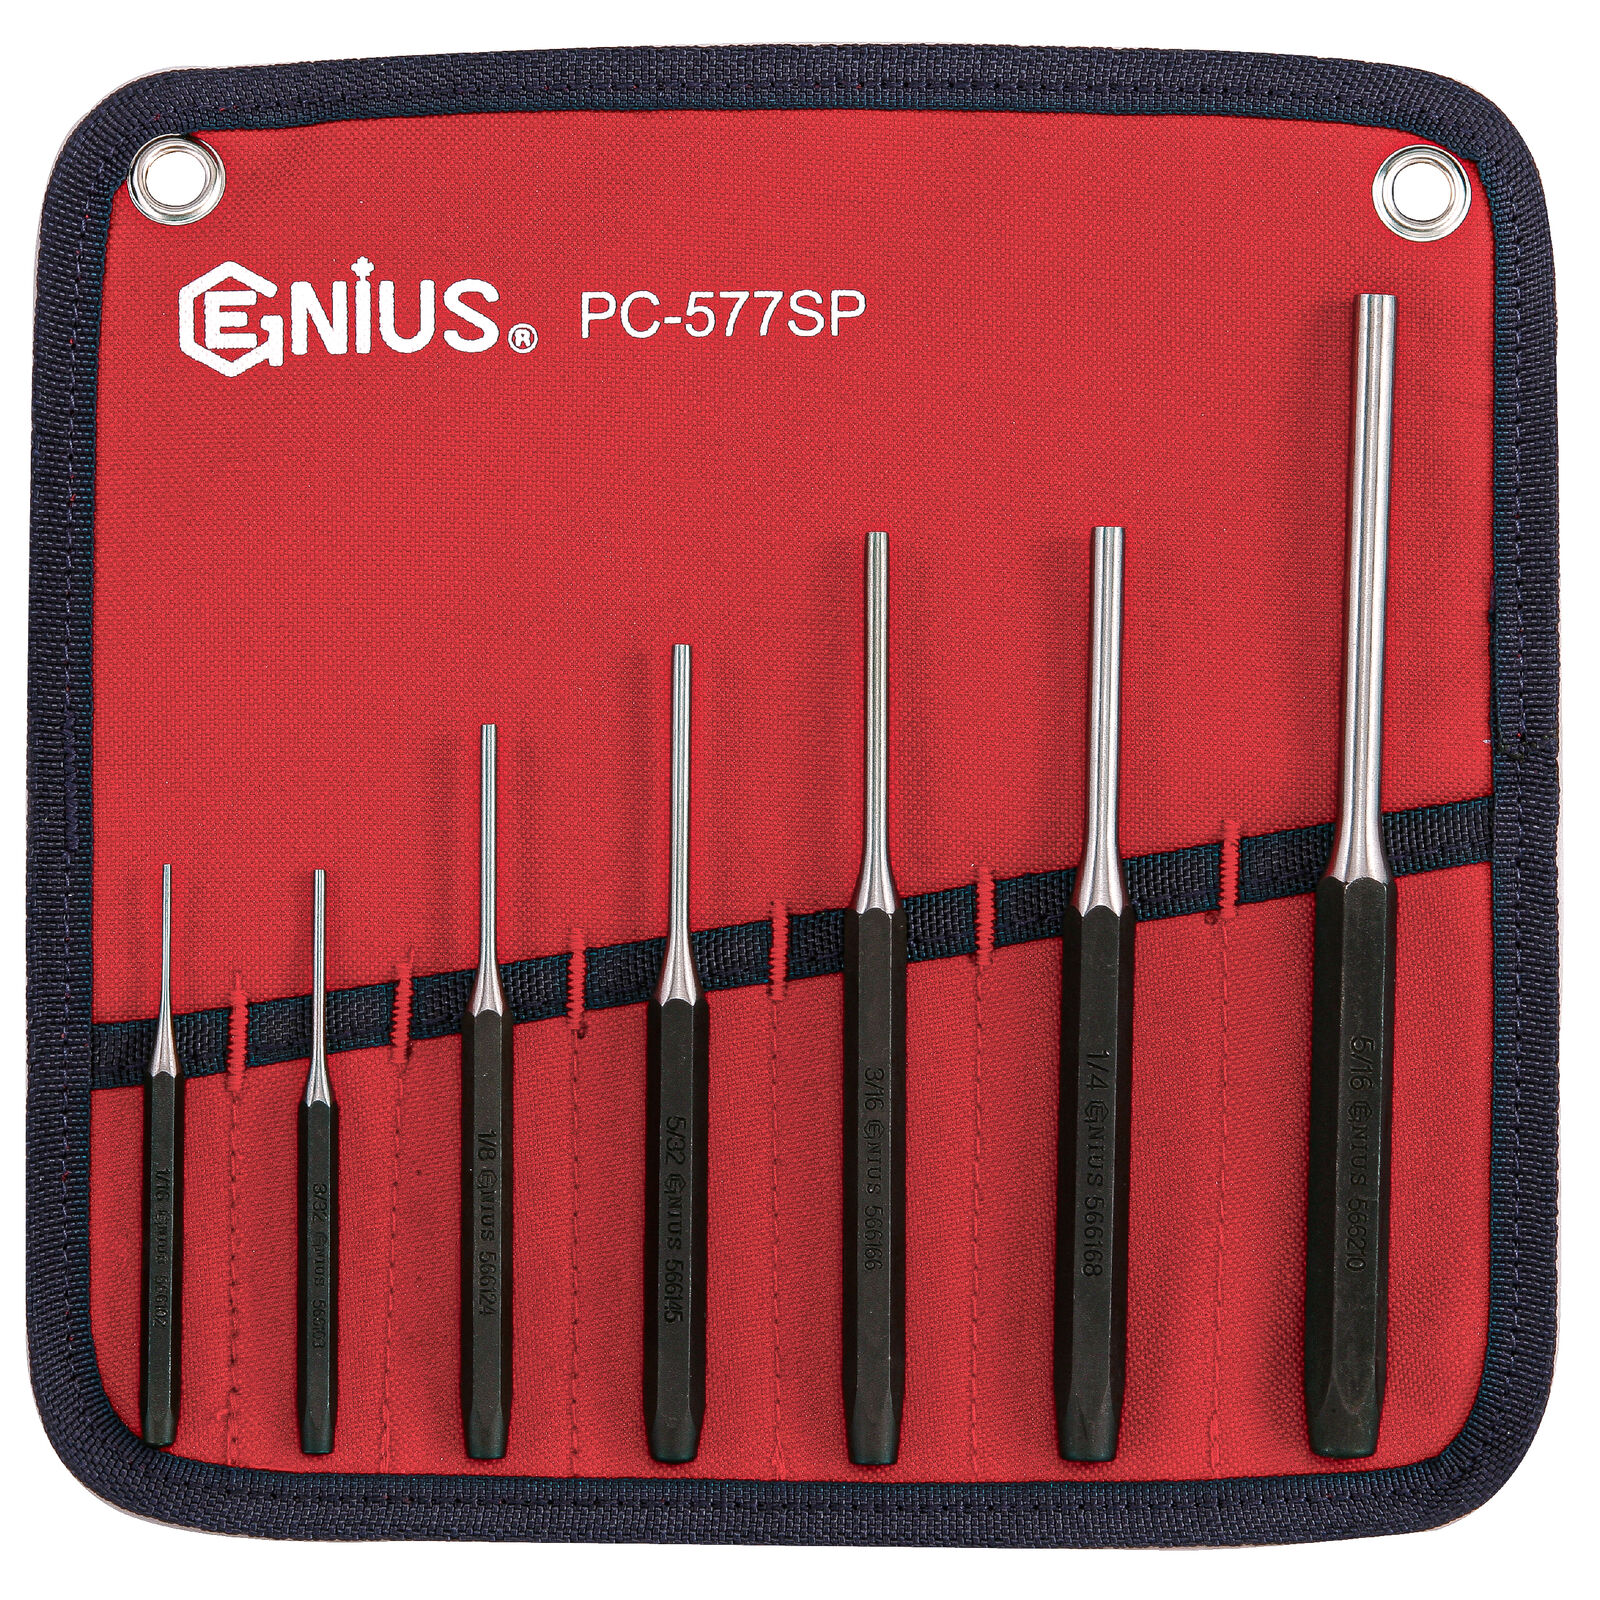 Genius Tools 7 Piece Sae Pin Punch Set - Pc-577sp